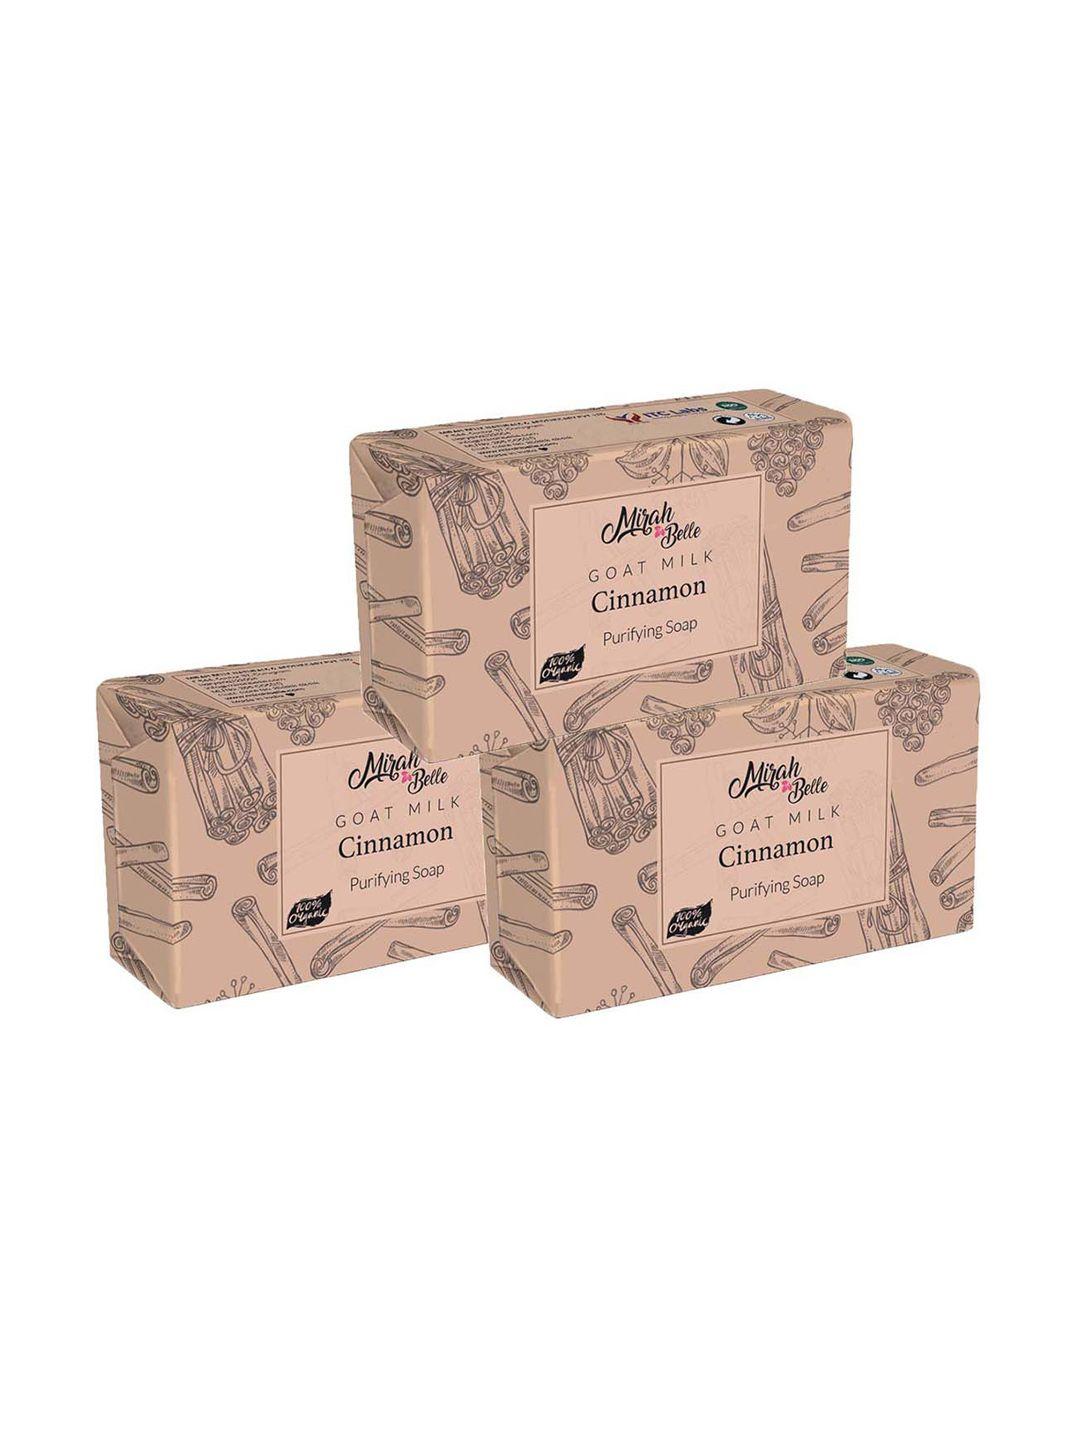 mirah belle pack of 3 brown goat milk cinnamon skin purifying soap 125 gm